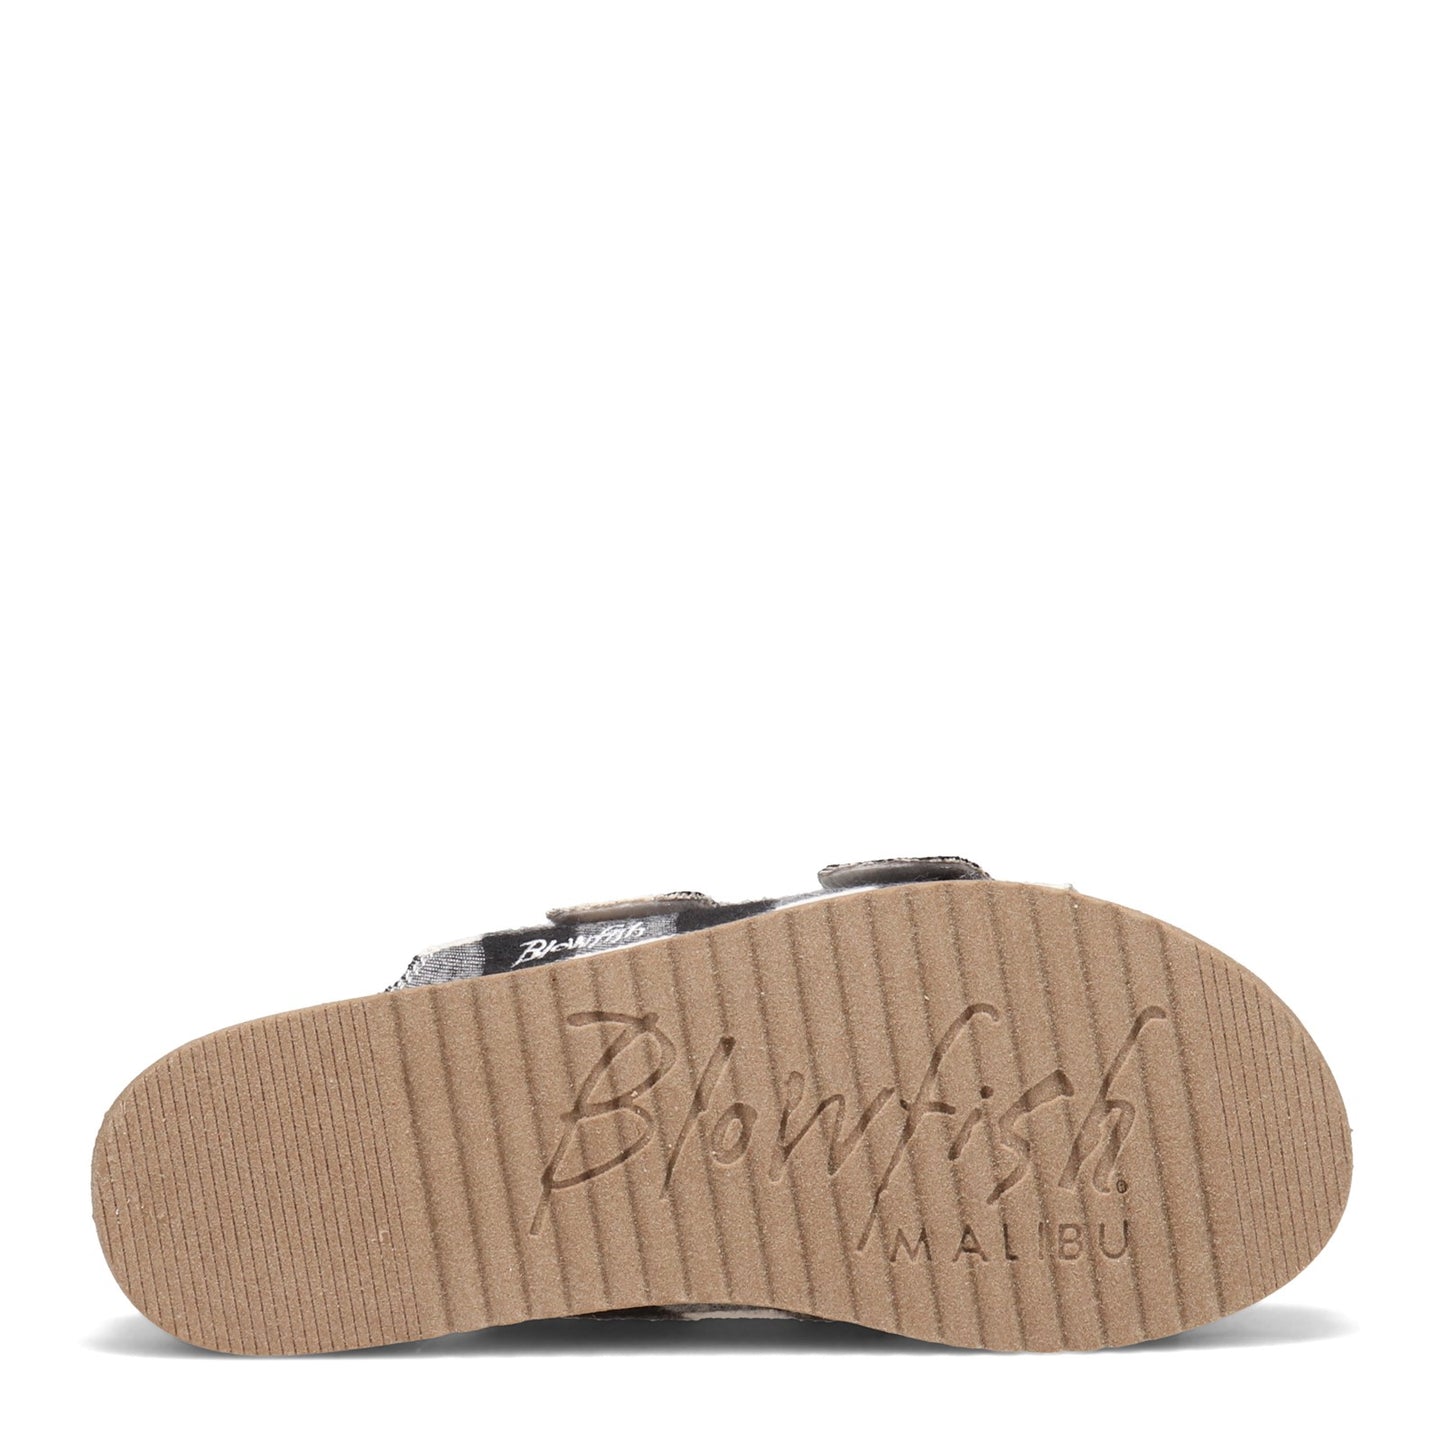 Peltz Shoes  Women's Blowfish Malibu Feelgoods Sandal BUFFALO CHECK GRAY B BF-9019-235